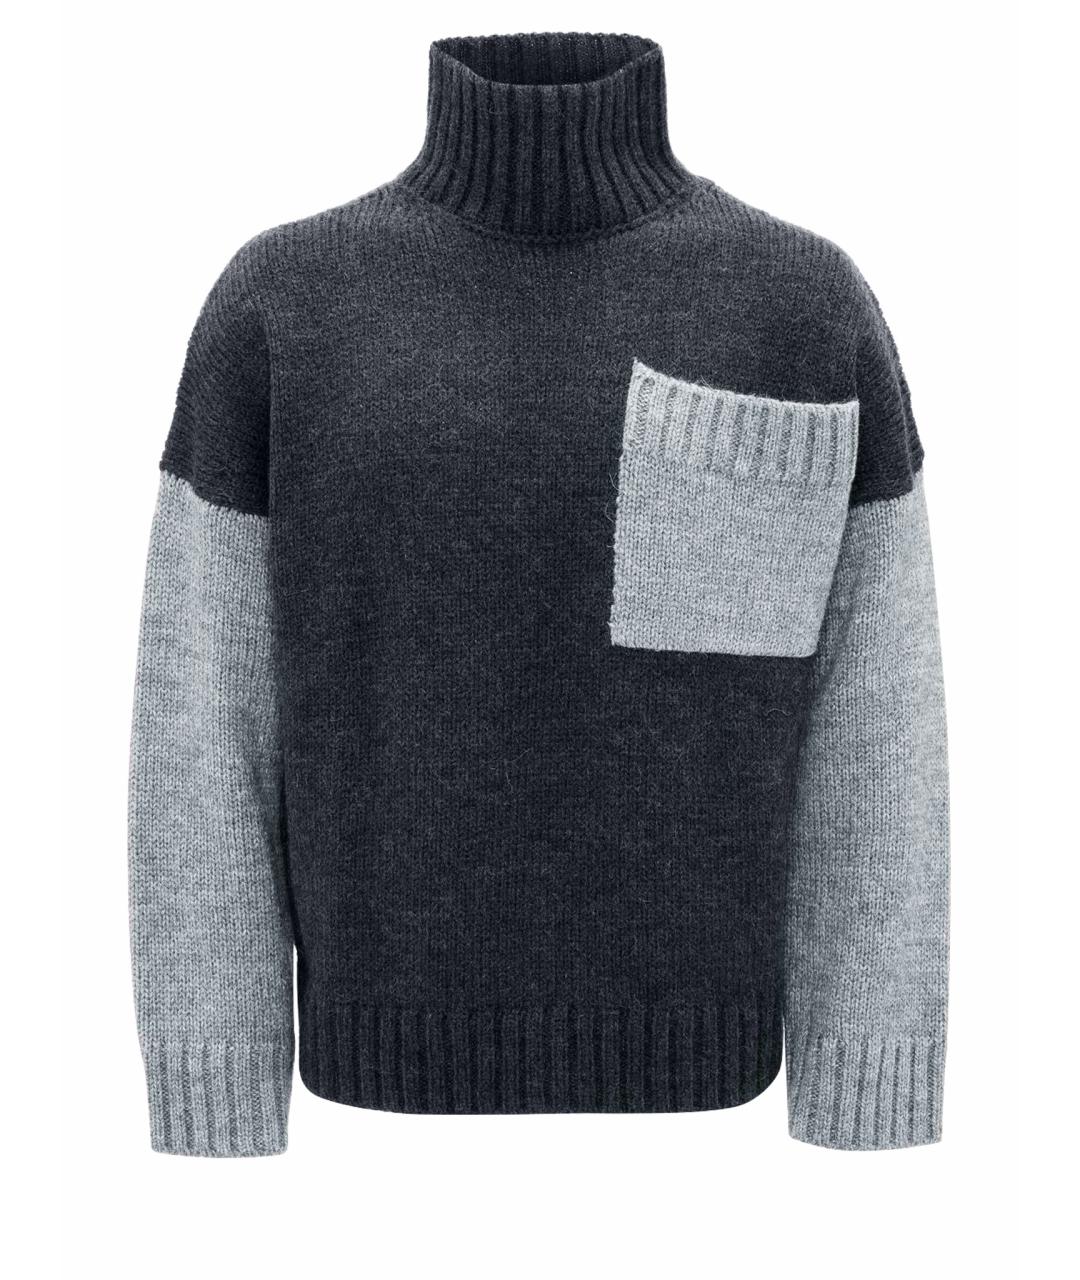 J.W.ANDERSON Серый шерстяной джемпер / свитер, фото 1